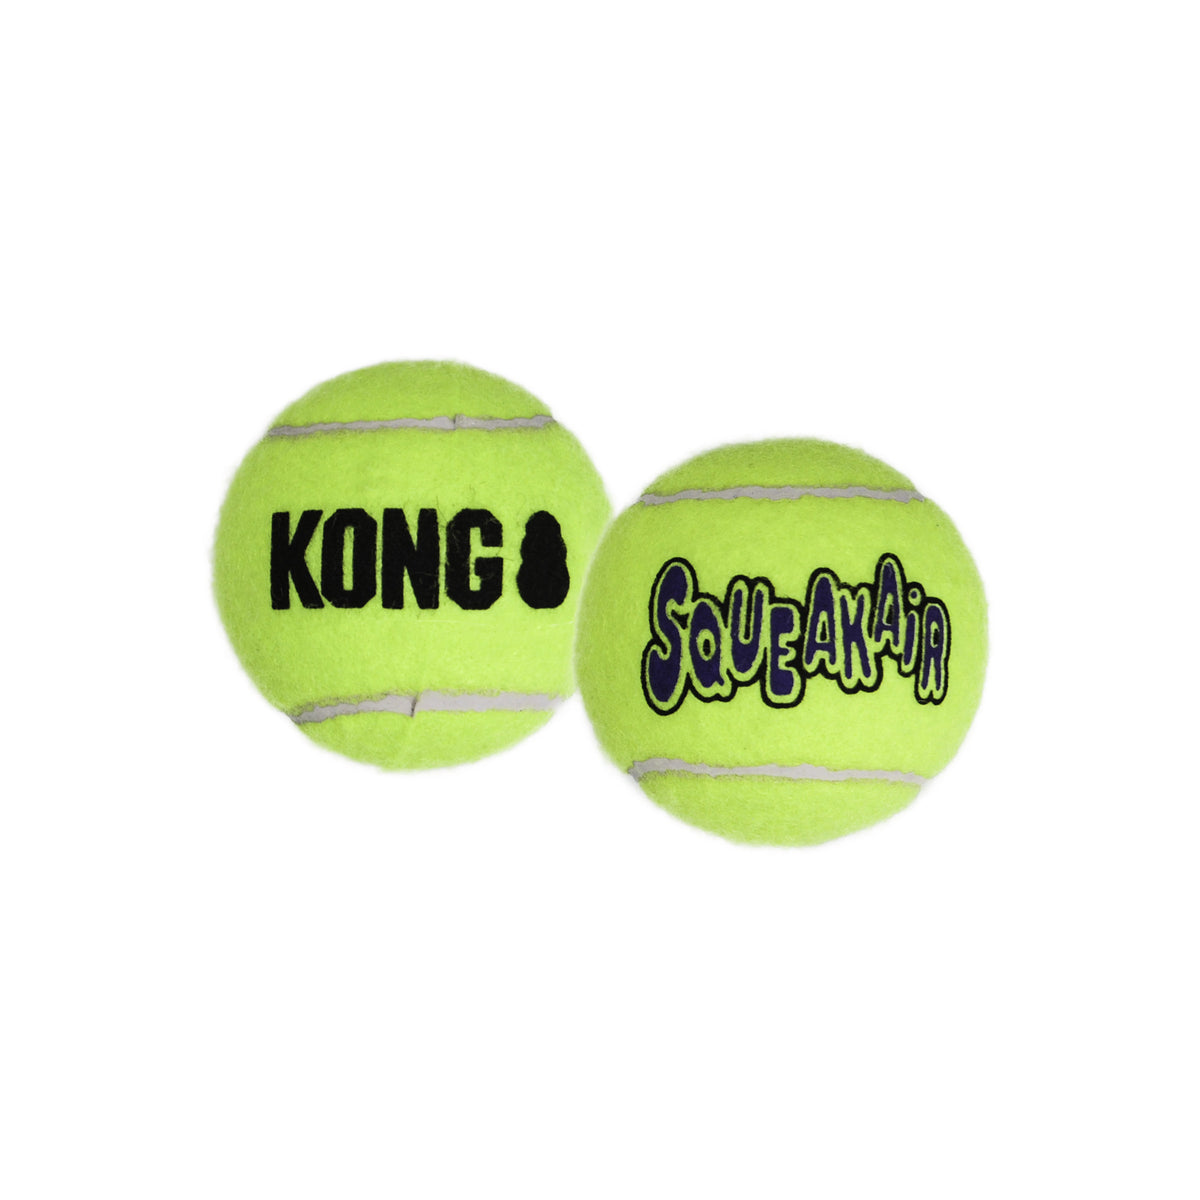 Kong Air Squeak Tennis Ball